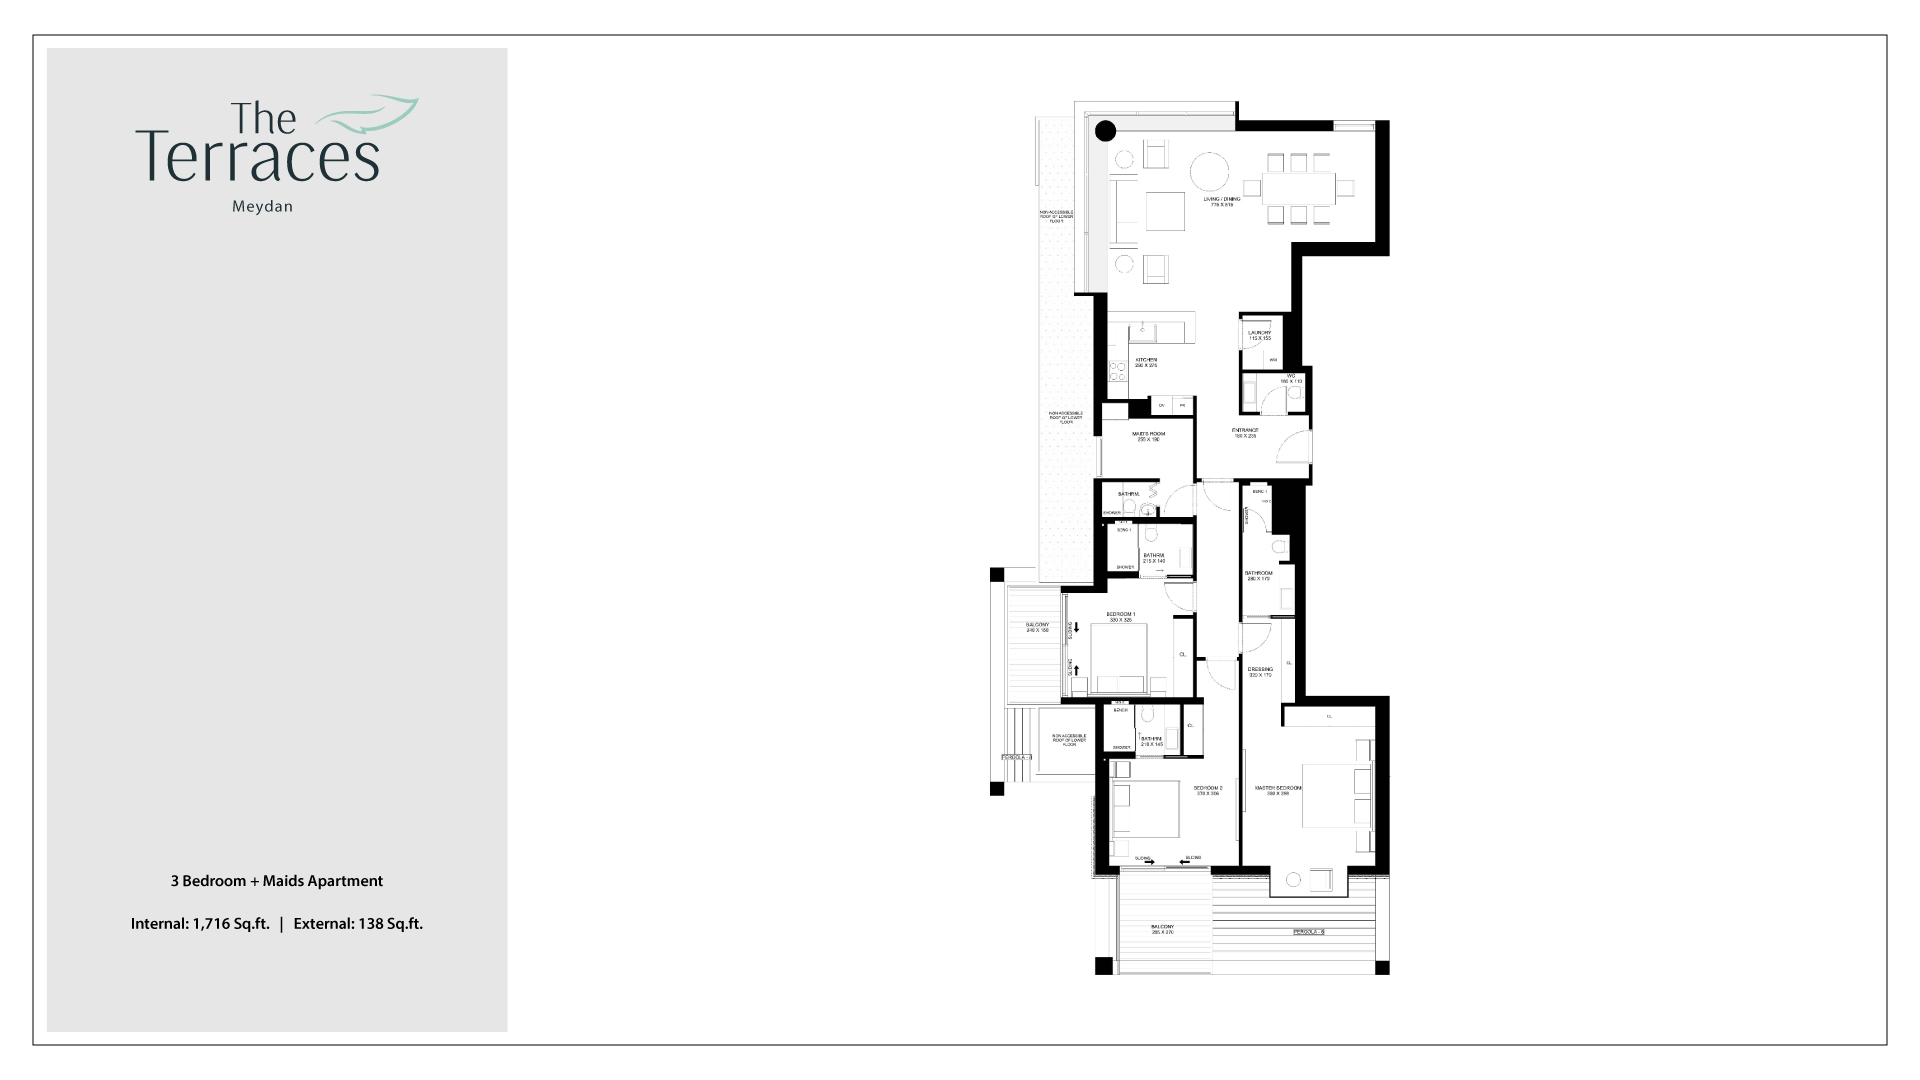 The Terraces 3  Bedroom + Maid Apartment Floor Plan